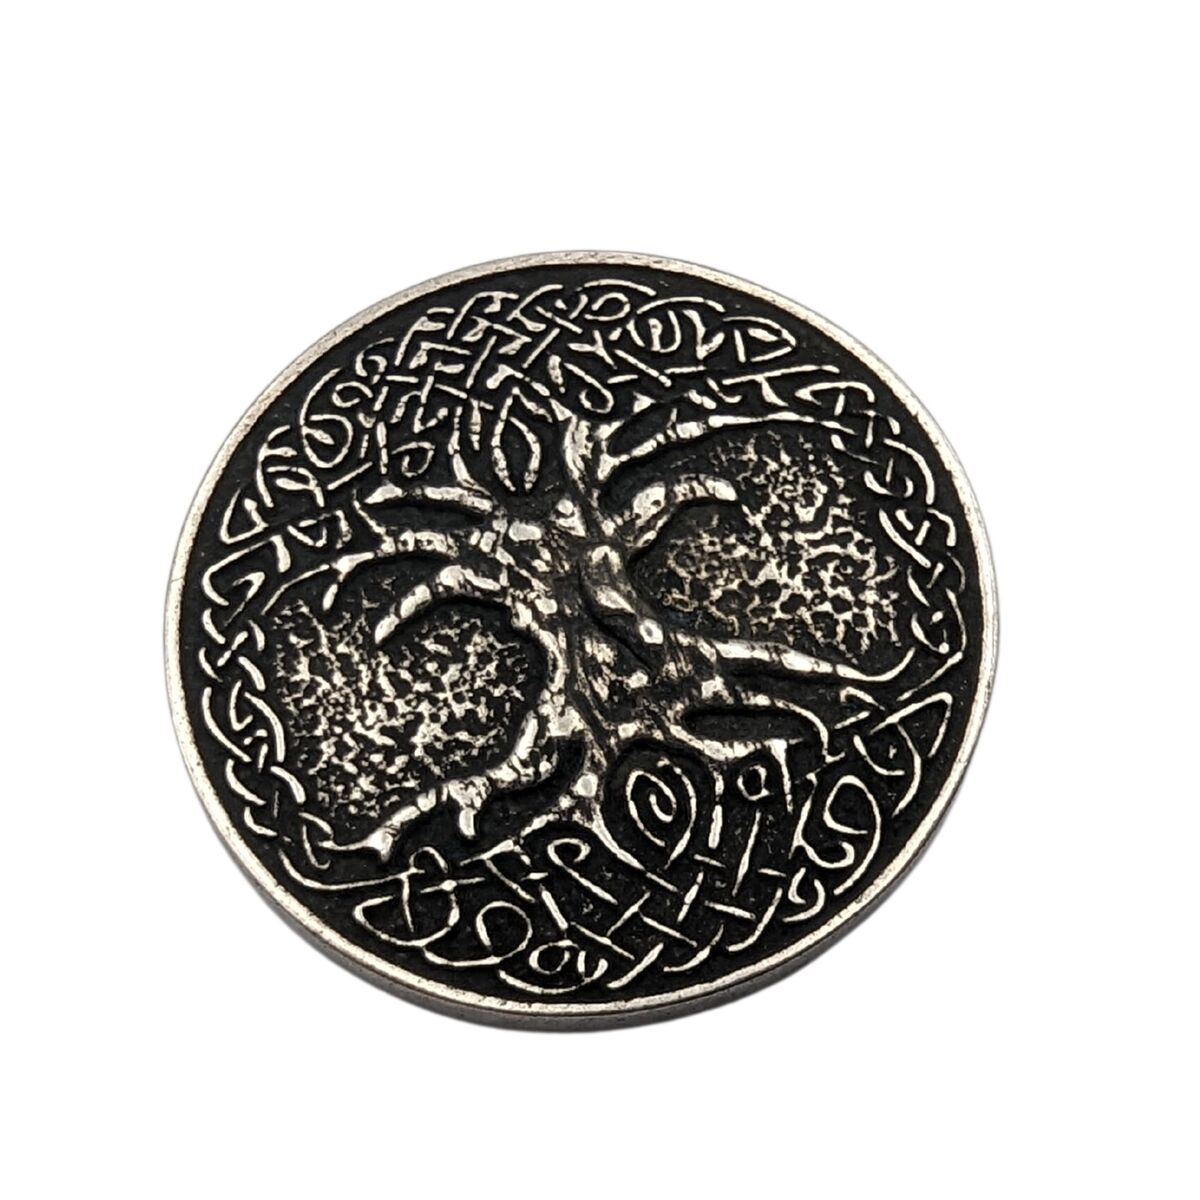 Yggdrasil tree of life coin   